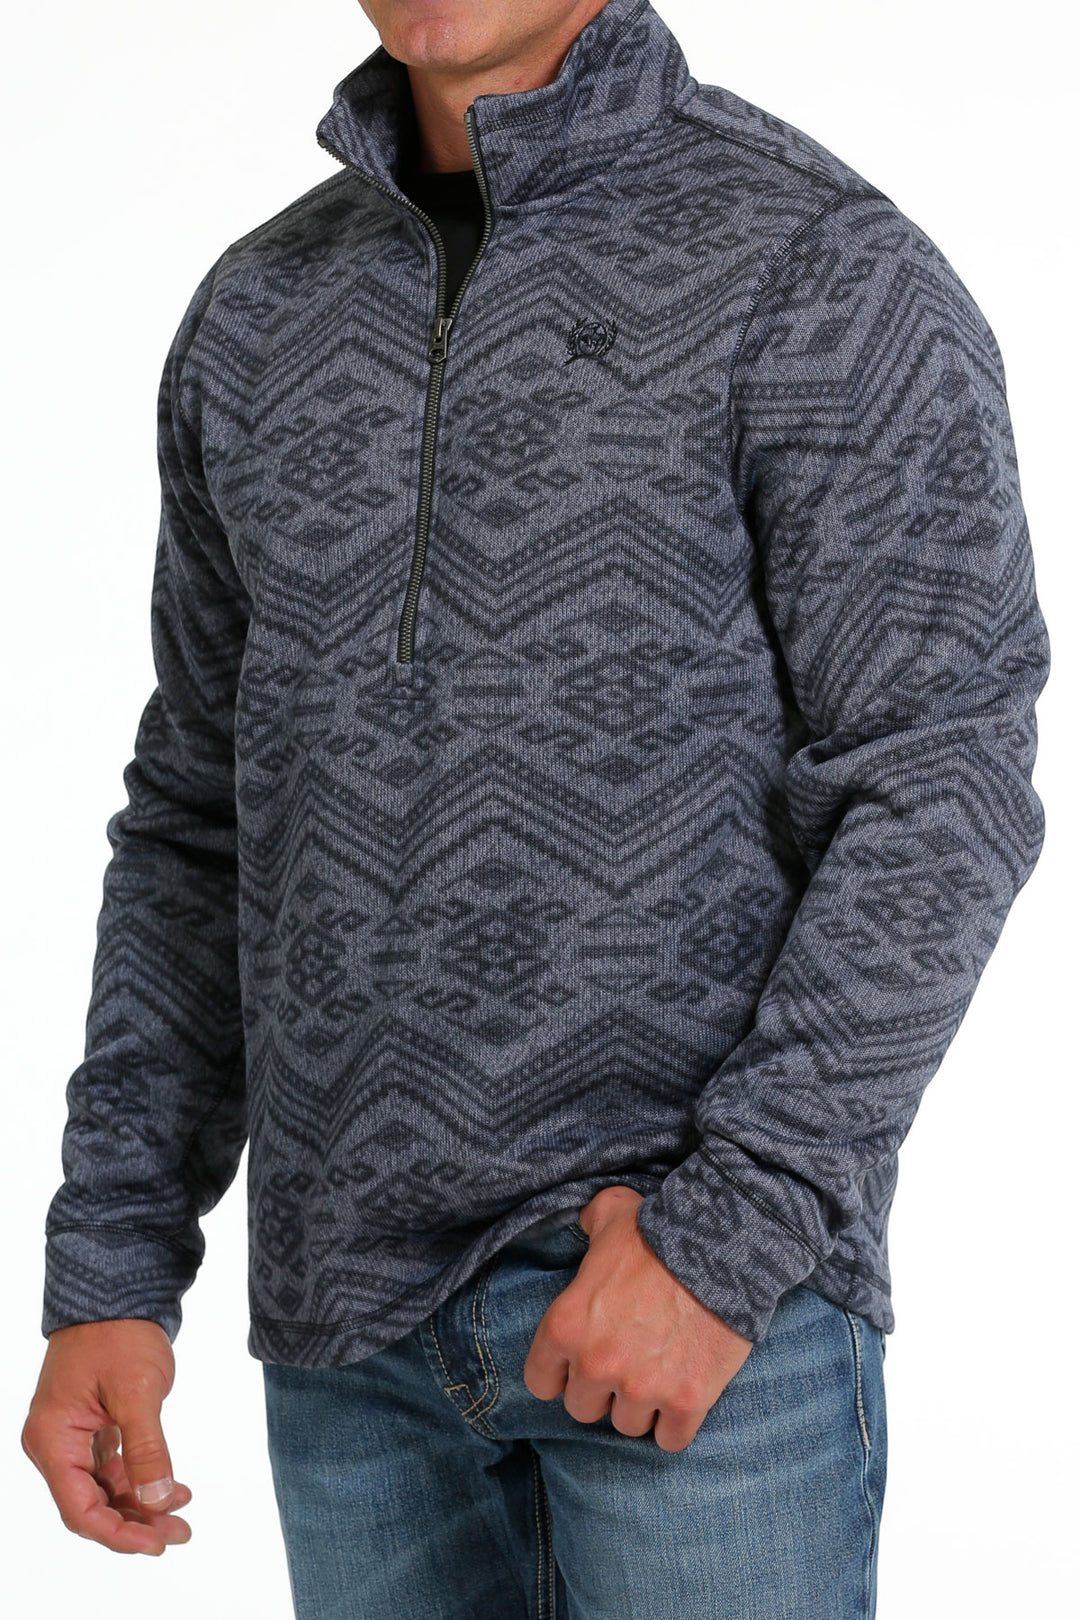 Cinch Men's Half Zip Blue Southwestern Sweater Pullover